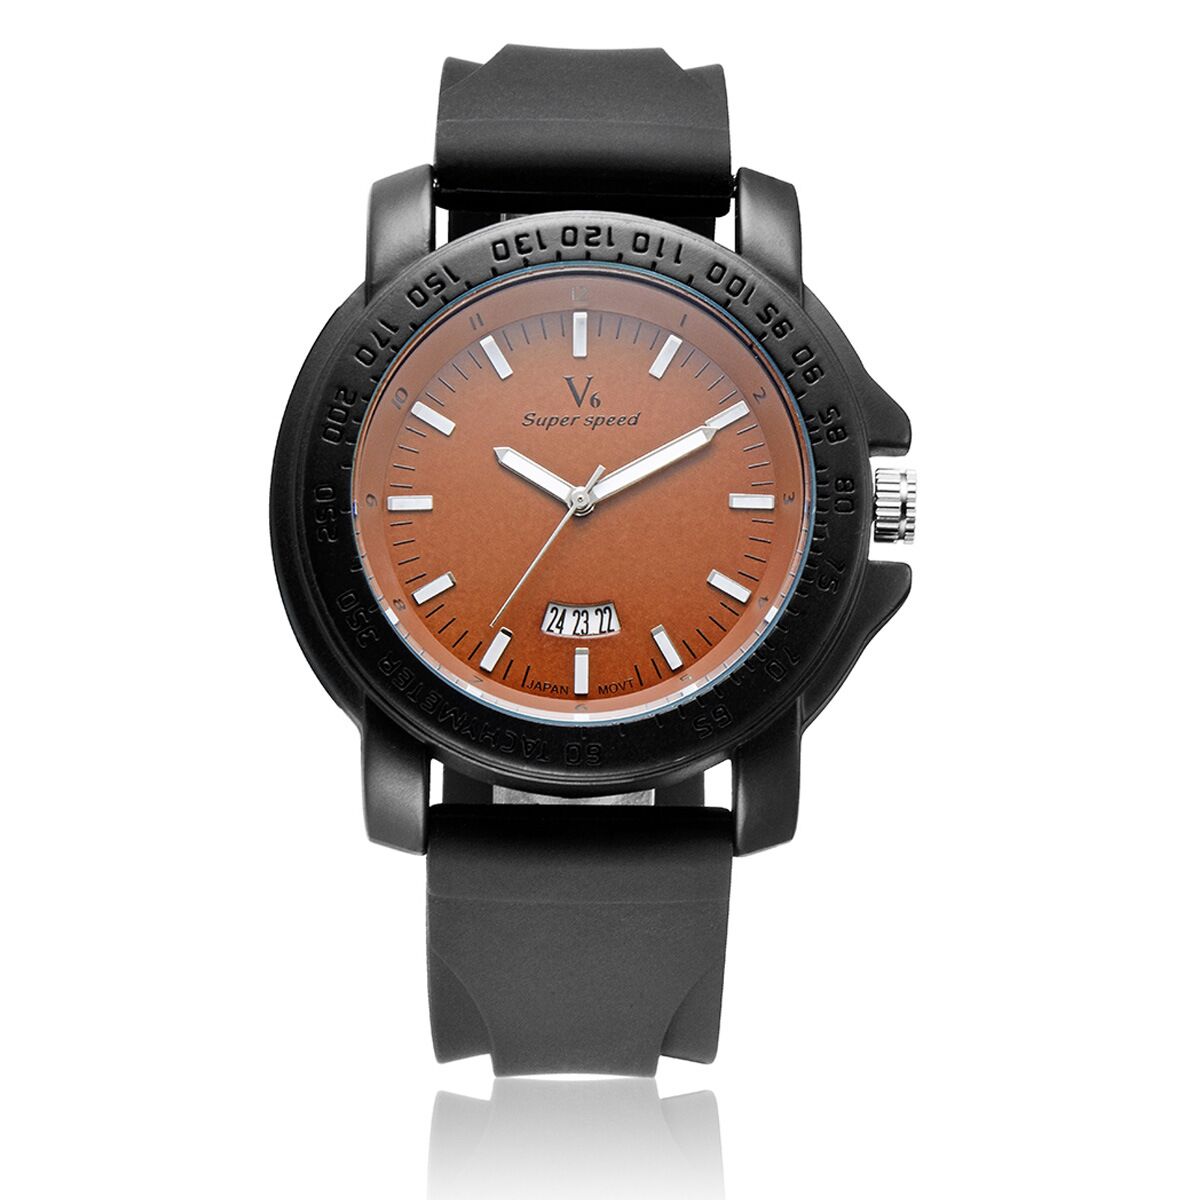 B001 V6 Quartz Movement Silicone Band/Leather Band Watch